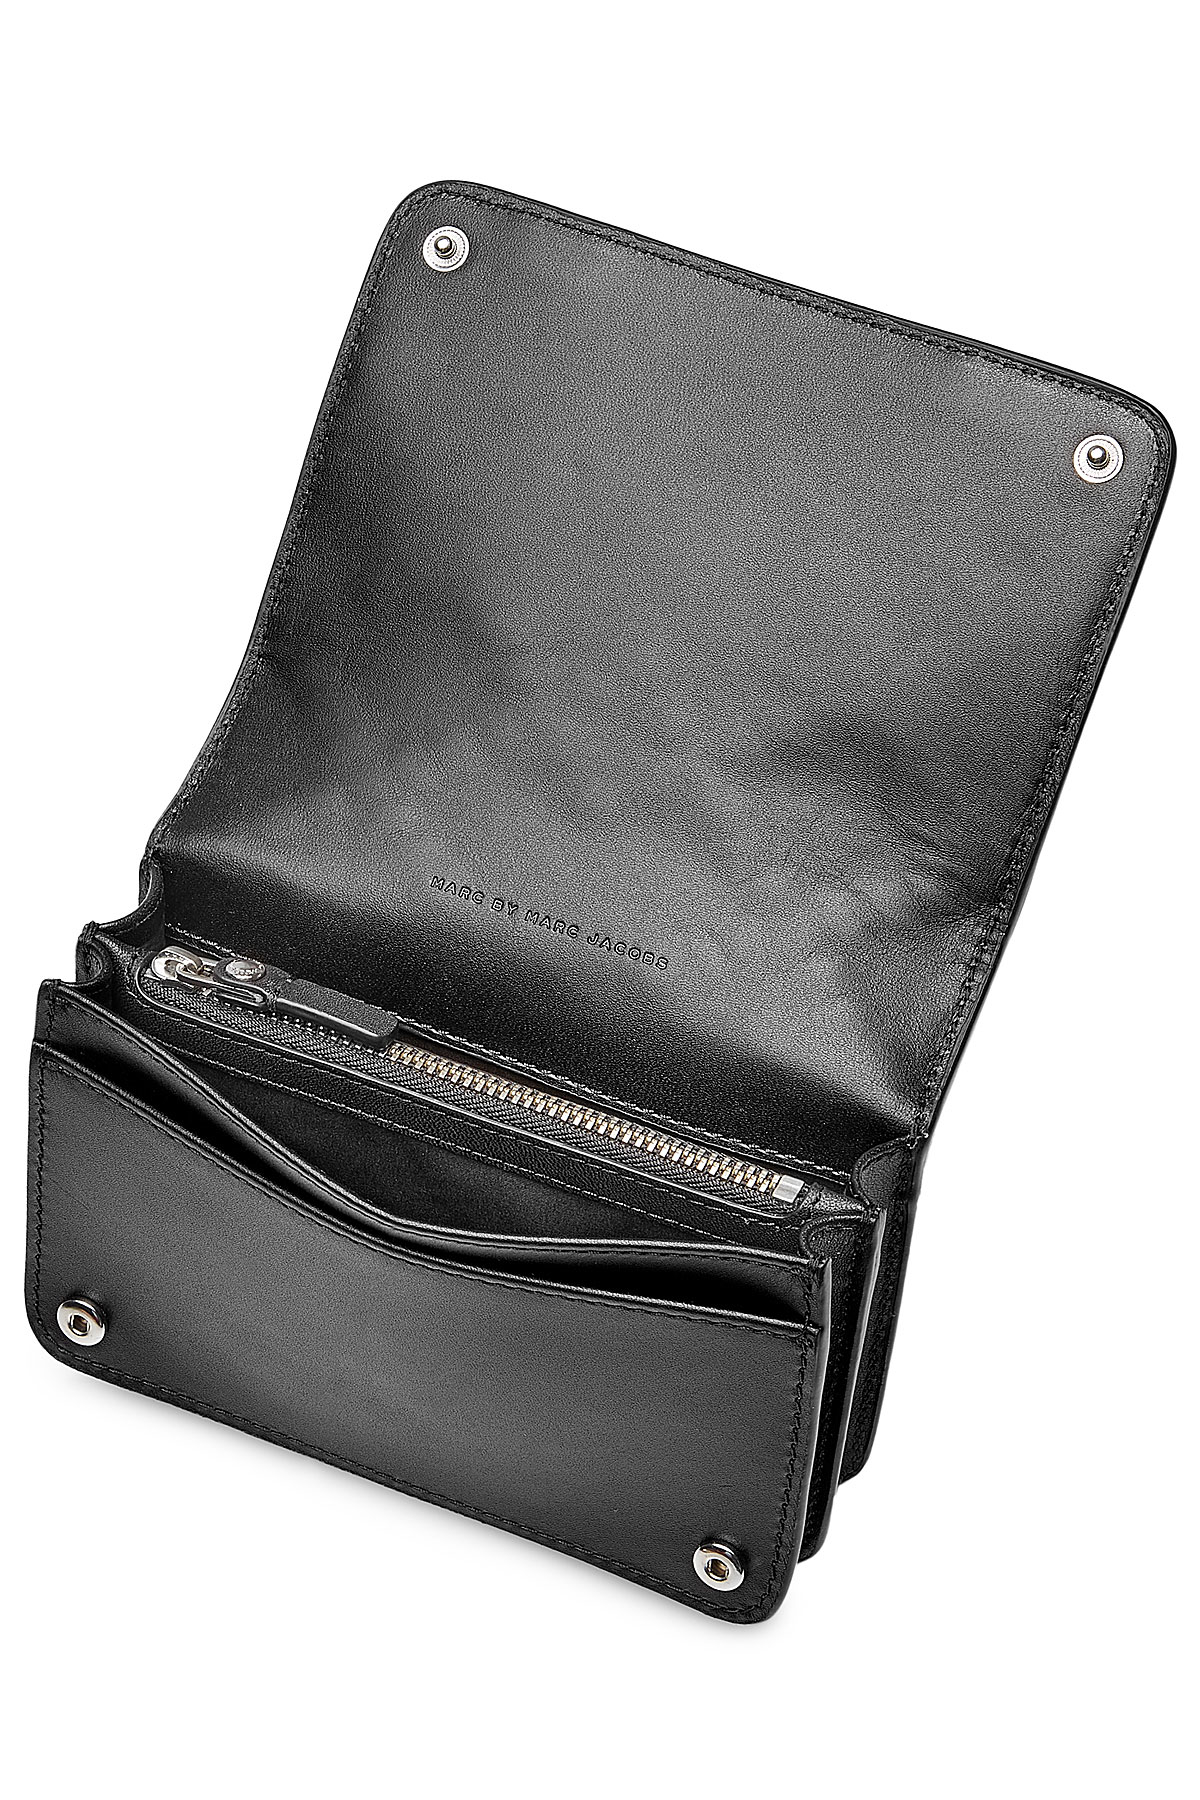 Marc By Marc Jacobs Quintana Cris Embellished Leather Belt Bag - Black - Lyst